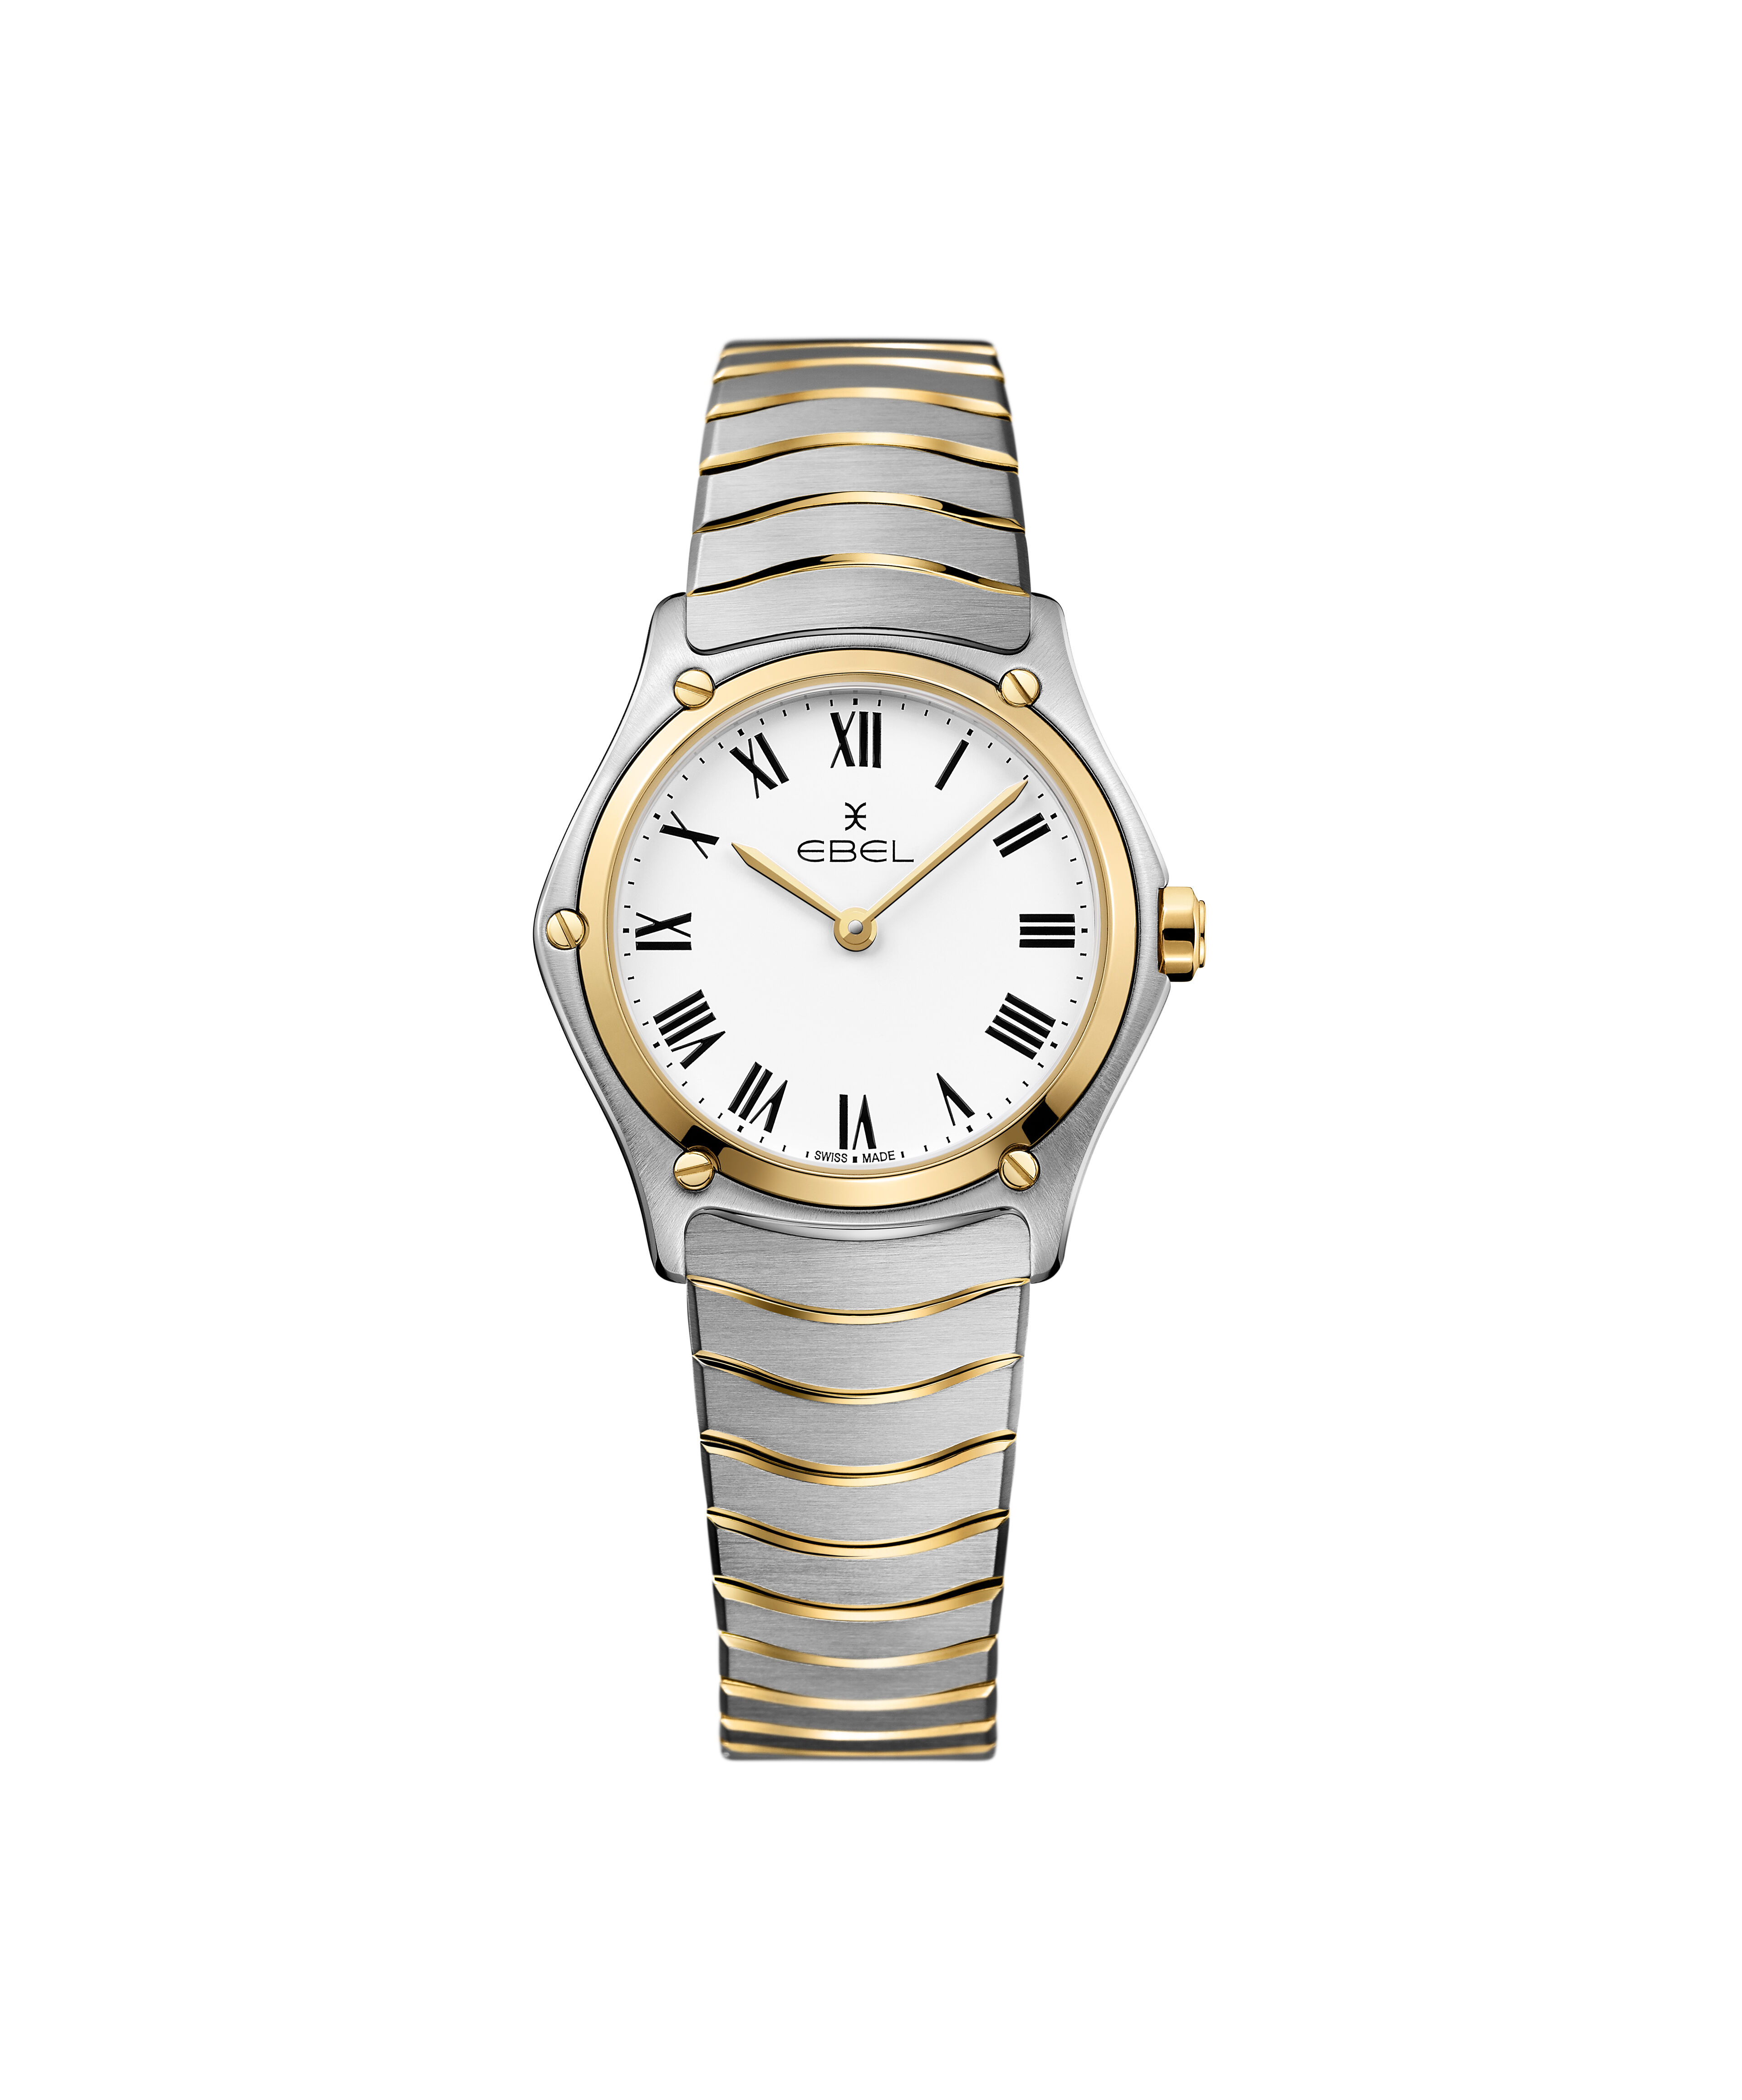 Tiffany Replicas Watches